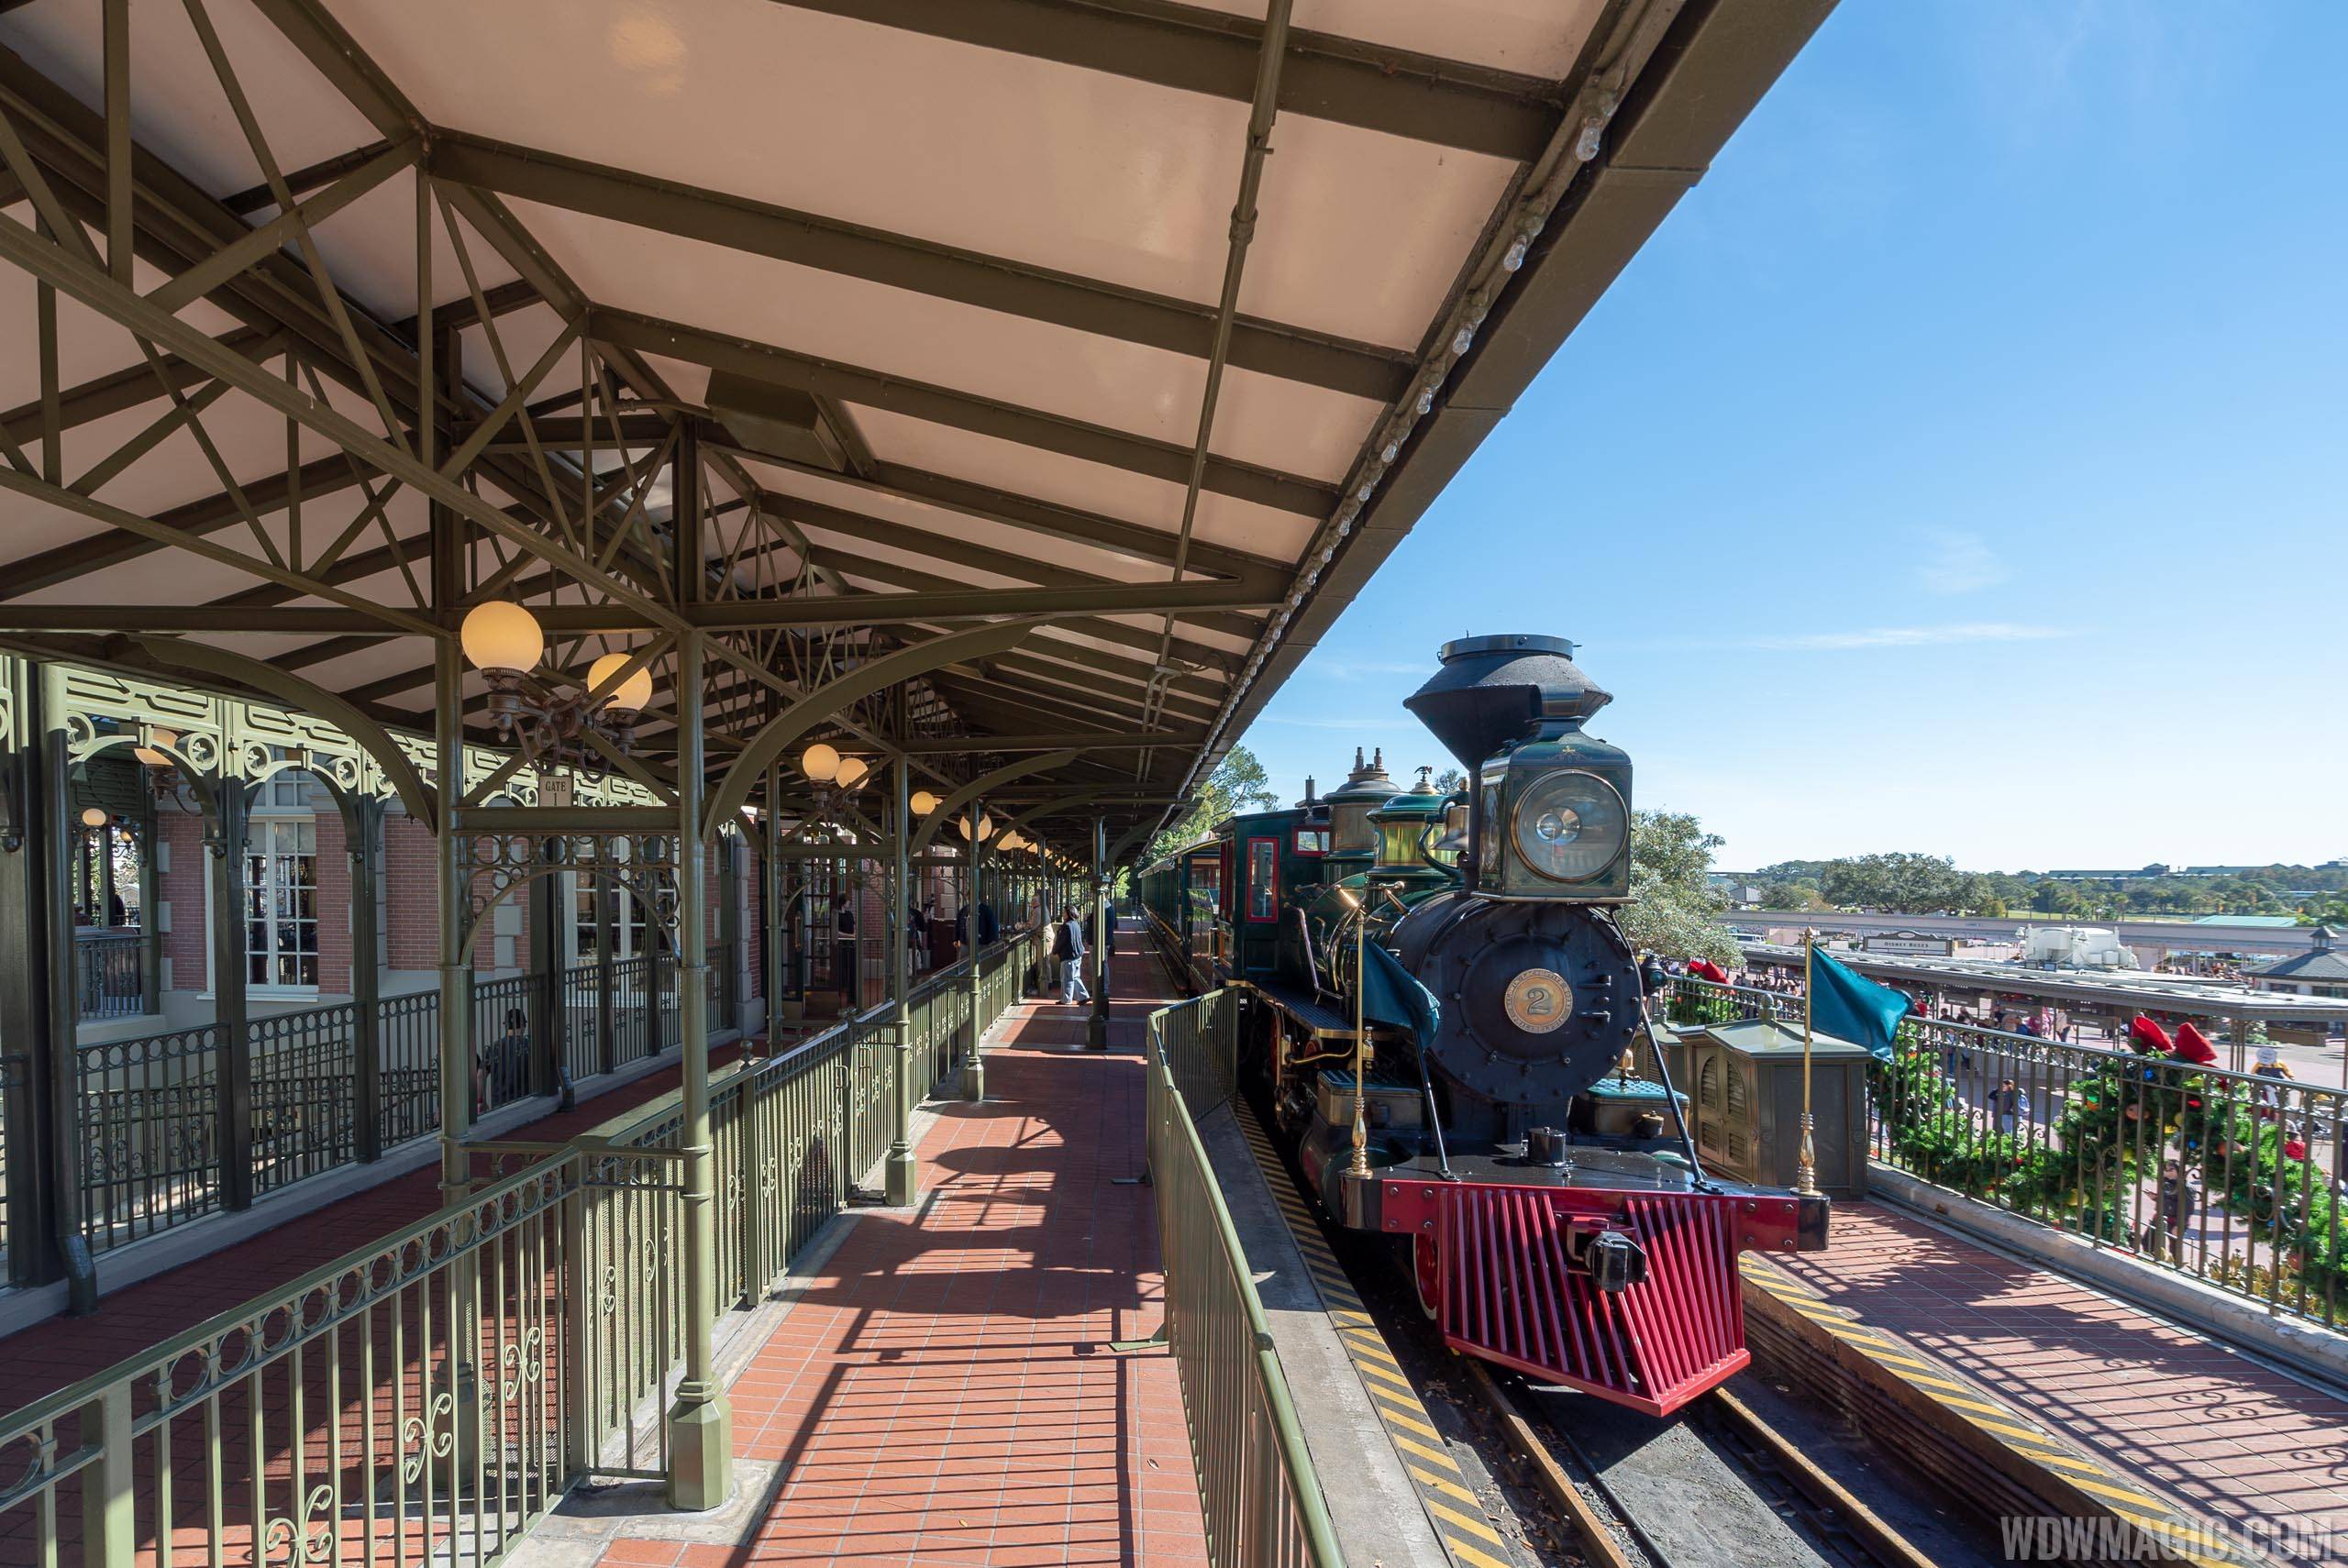 PHOTOS - A look at the Walt Disney World Railroad stationary exhibit